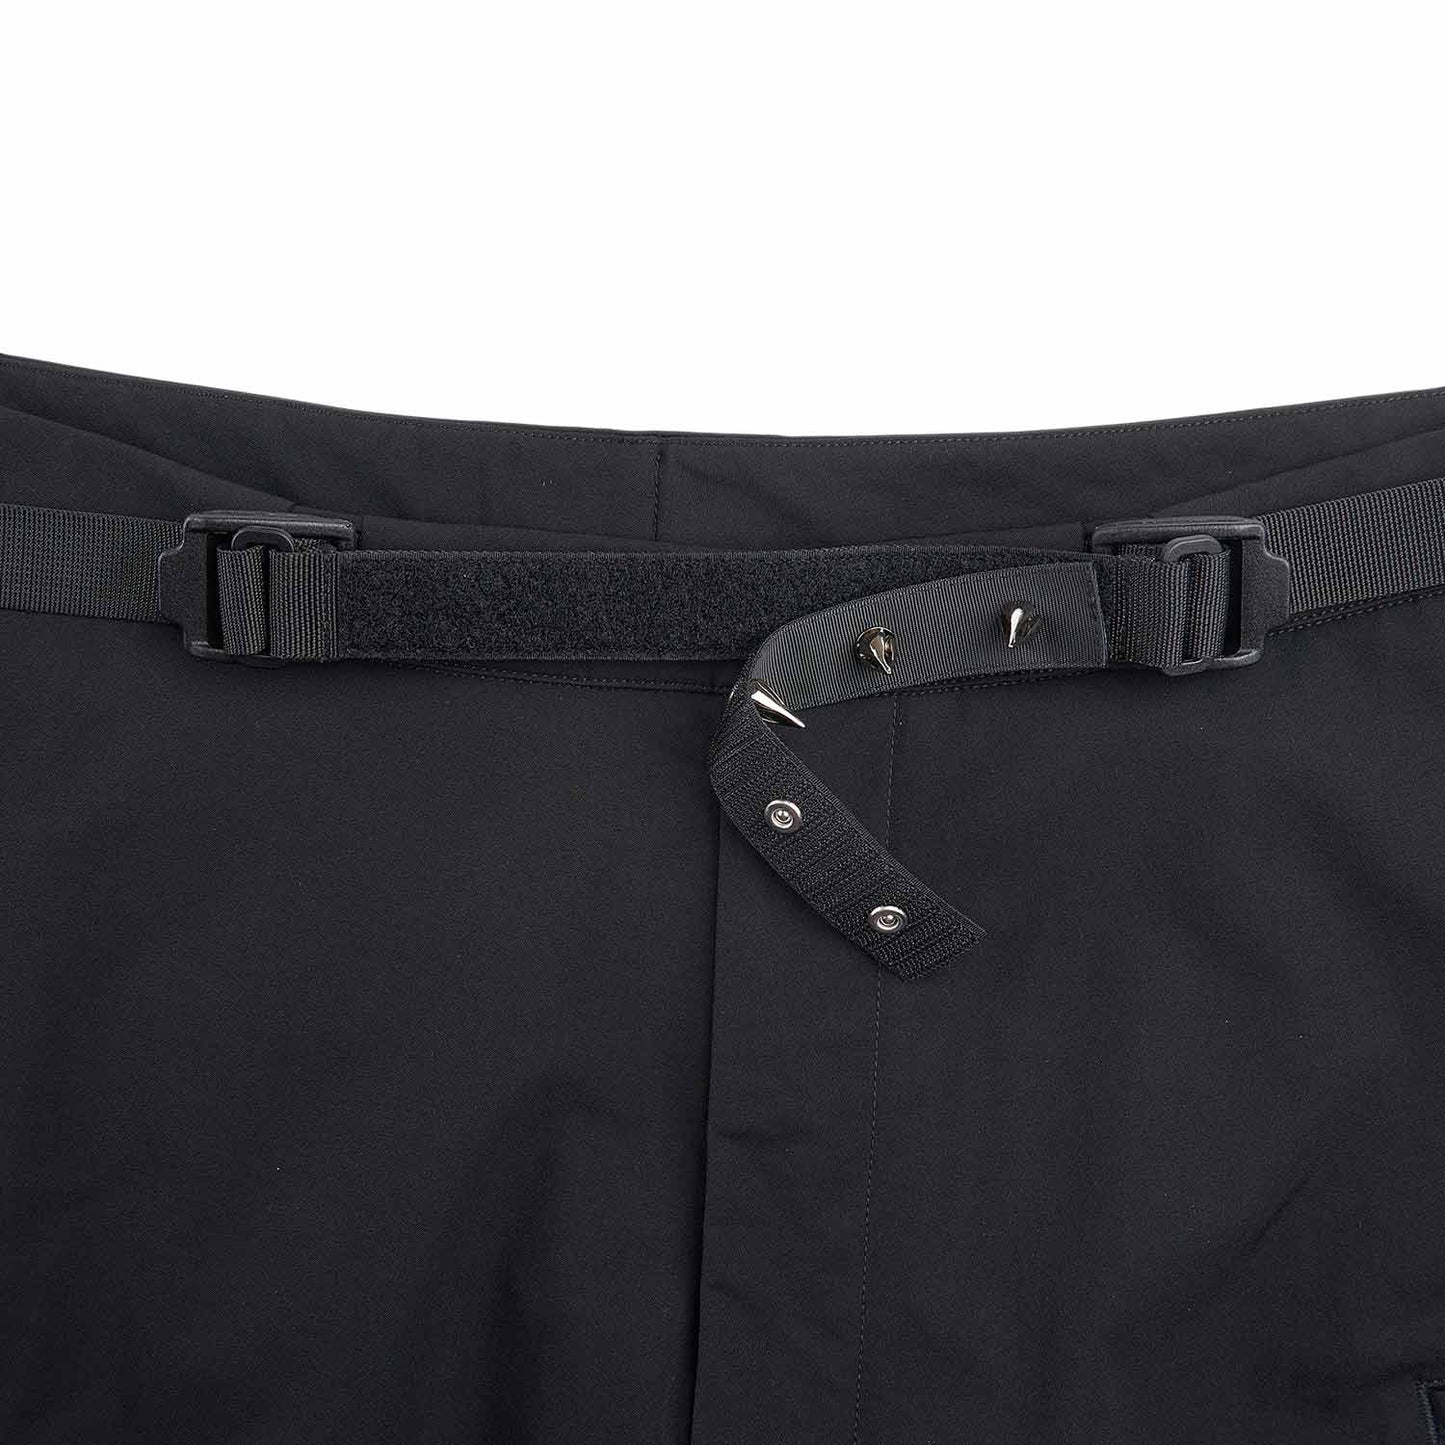 acronym p17-ds schoeller® Dryskin™ web belt trouser (schwarz)